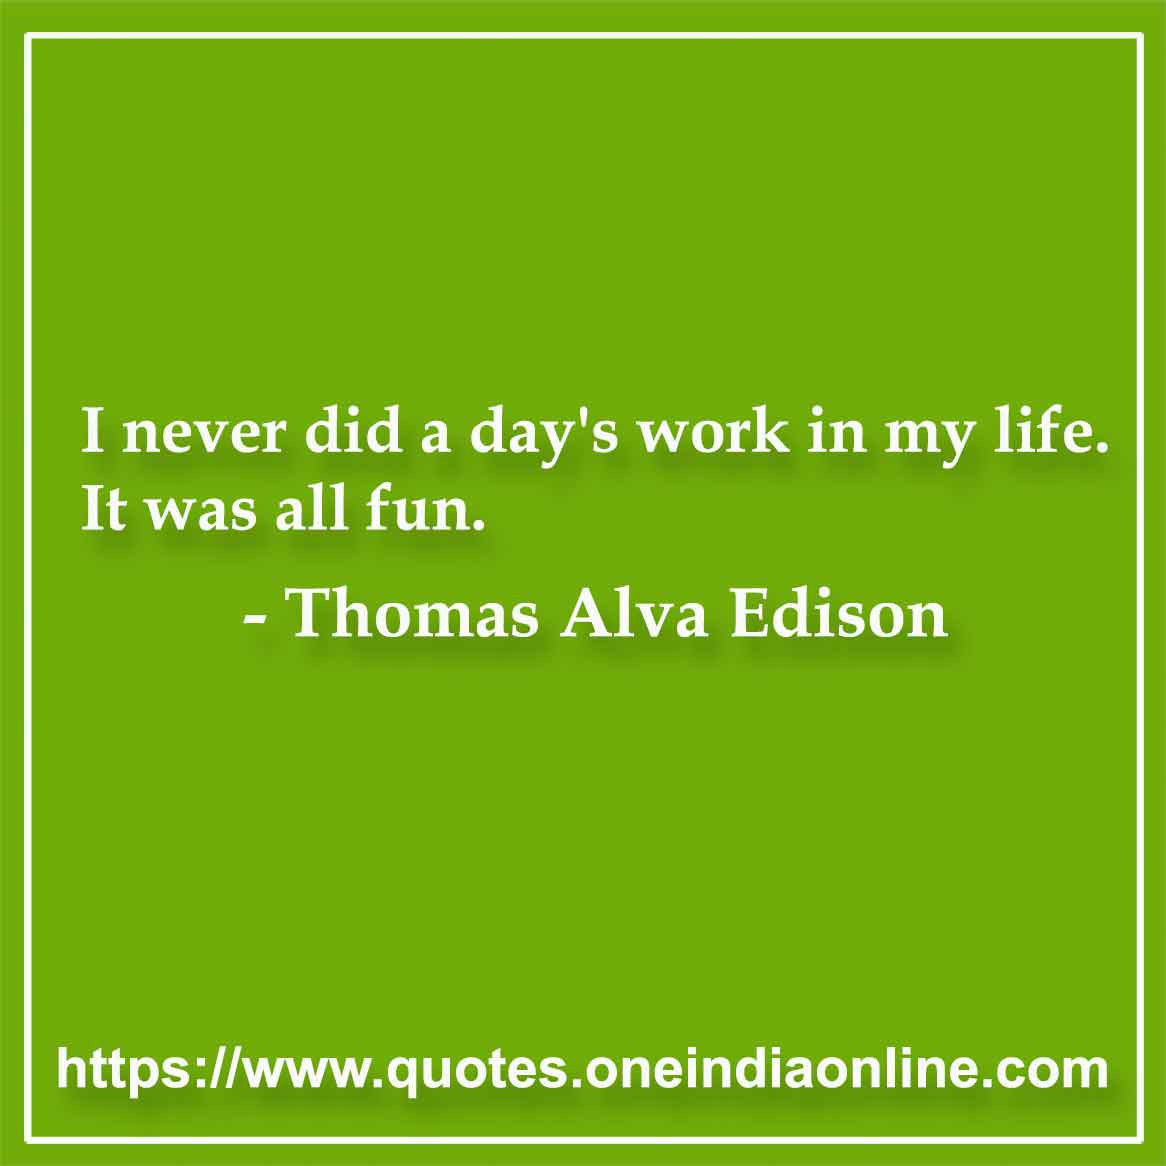 I never did a day's work in my life. It was all fun. Thomas Alva Edison Quotation